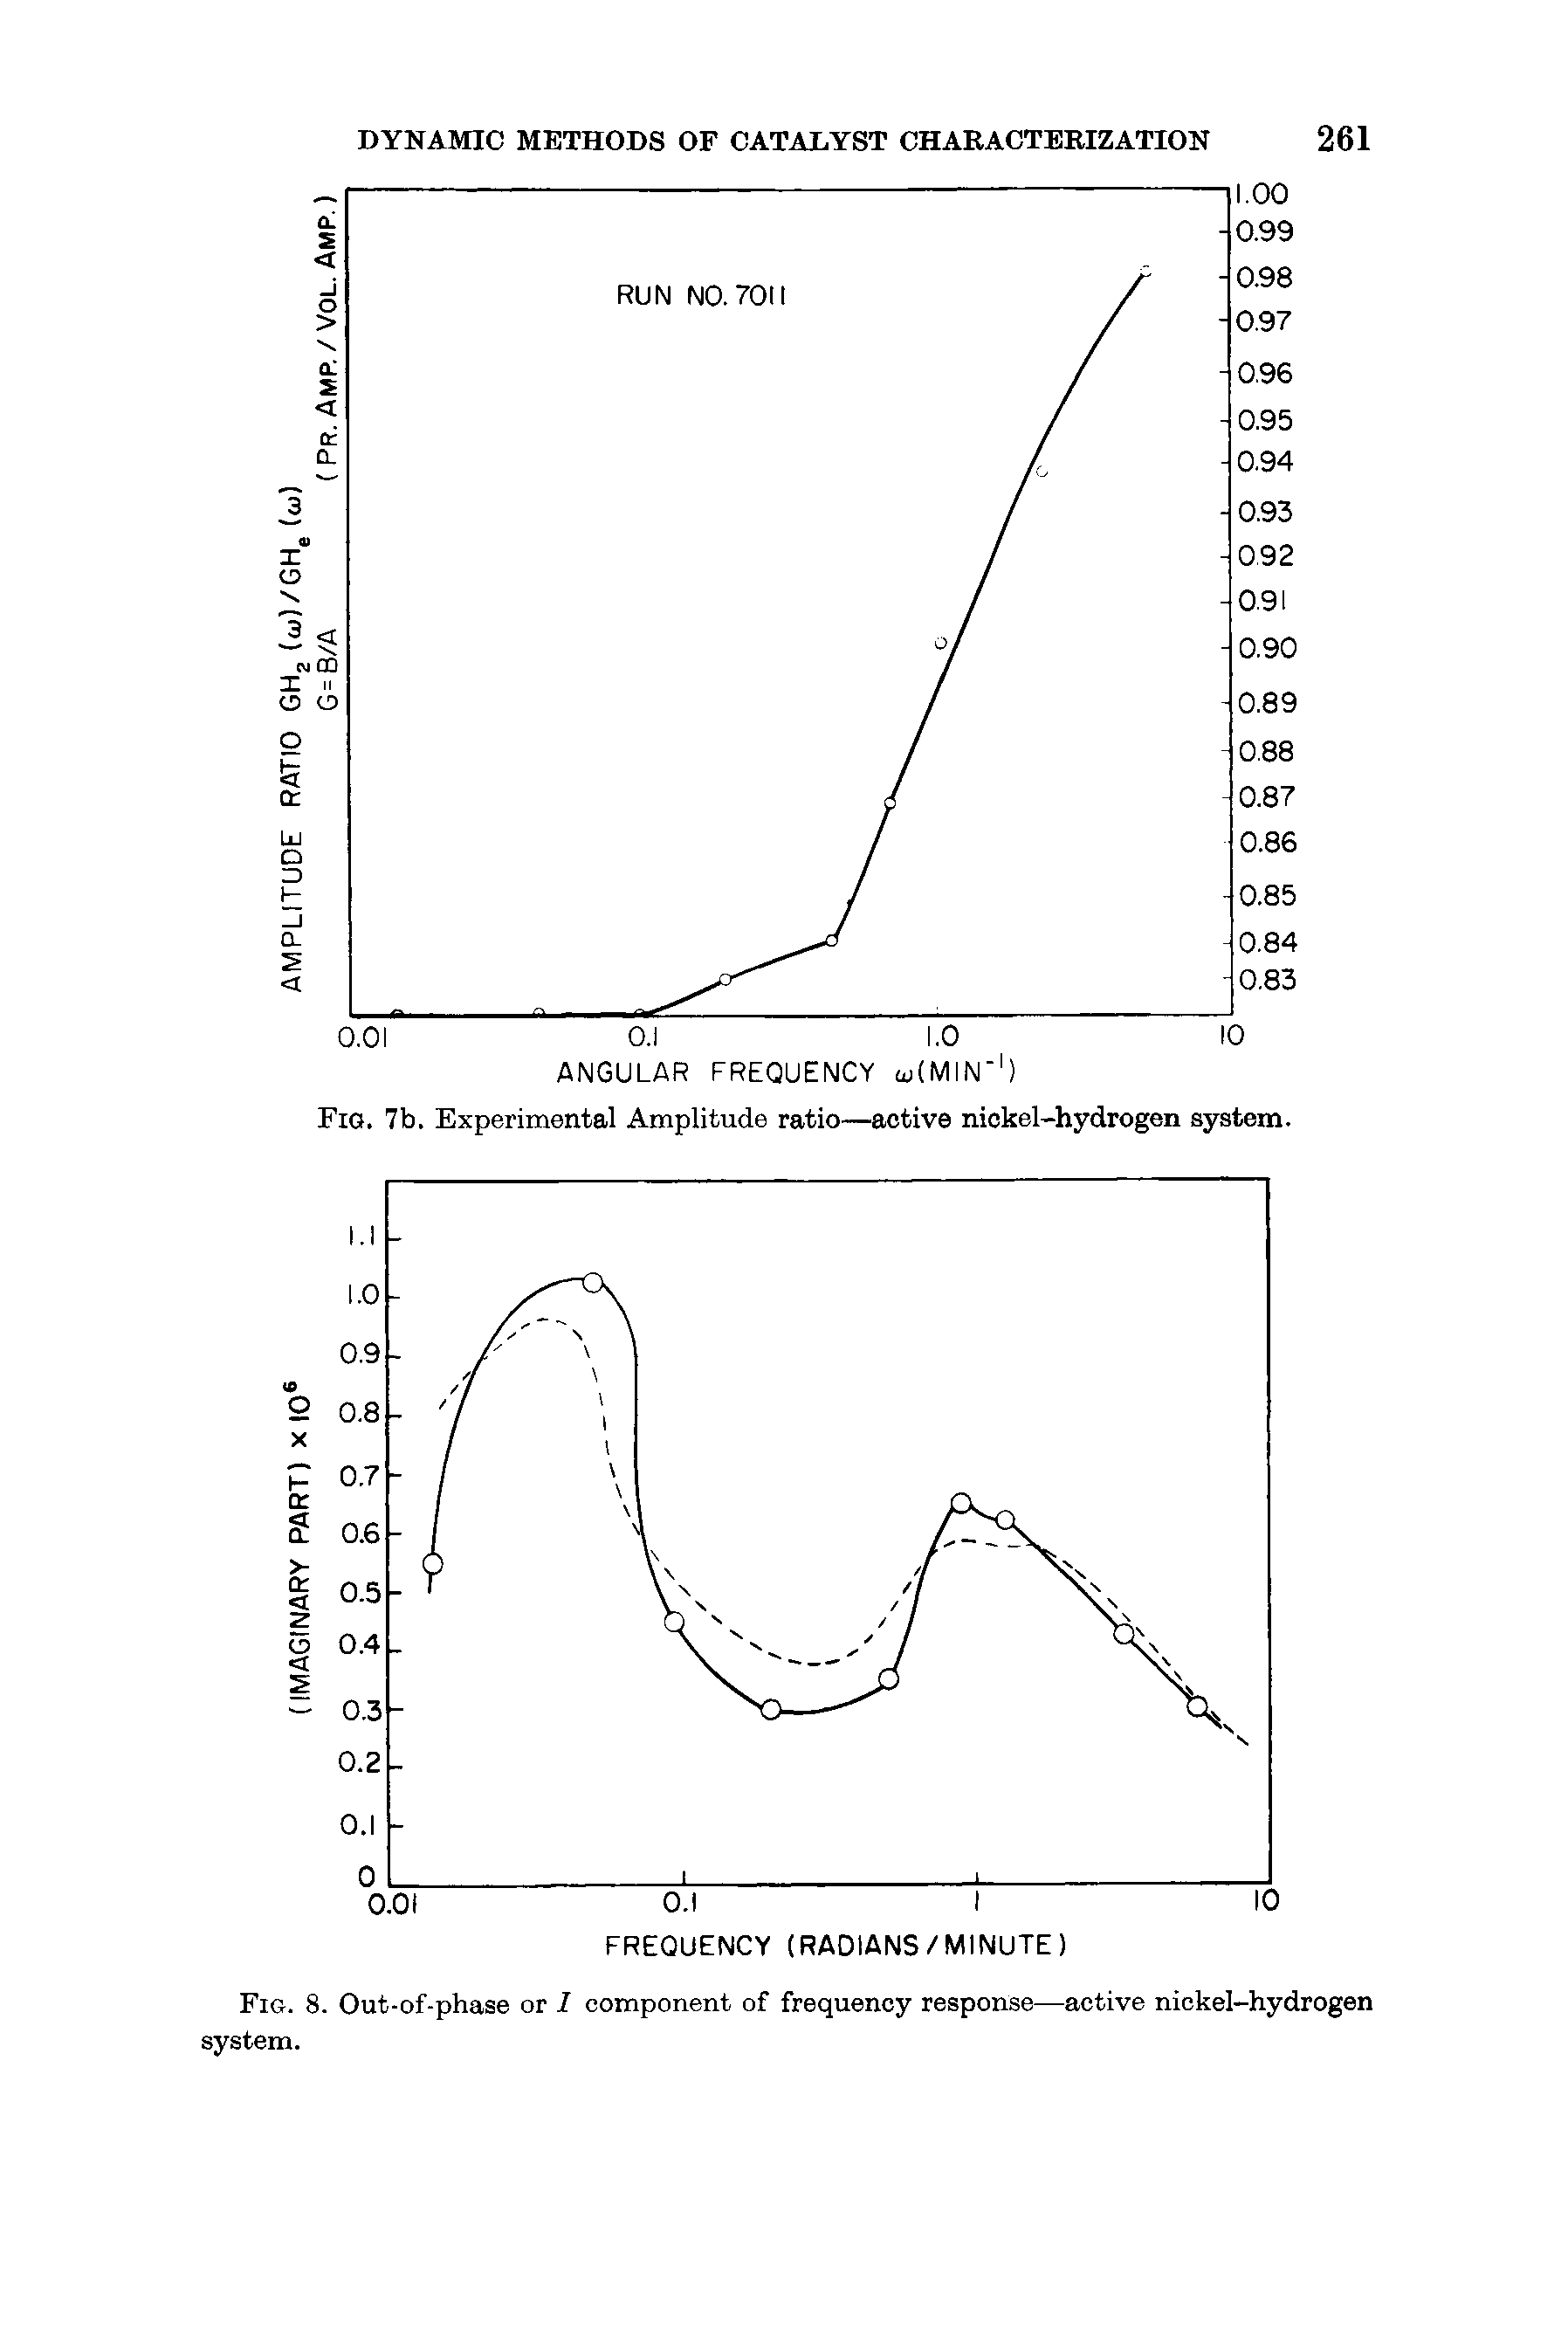 Fig. 7b. Experimental Amplitude ratio—active nickel-hydrogen system.